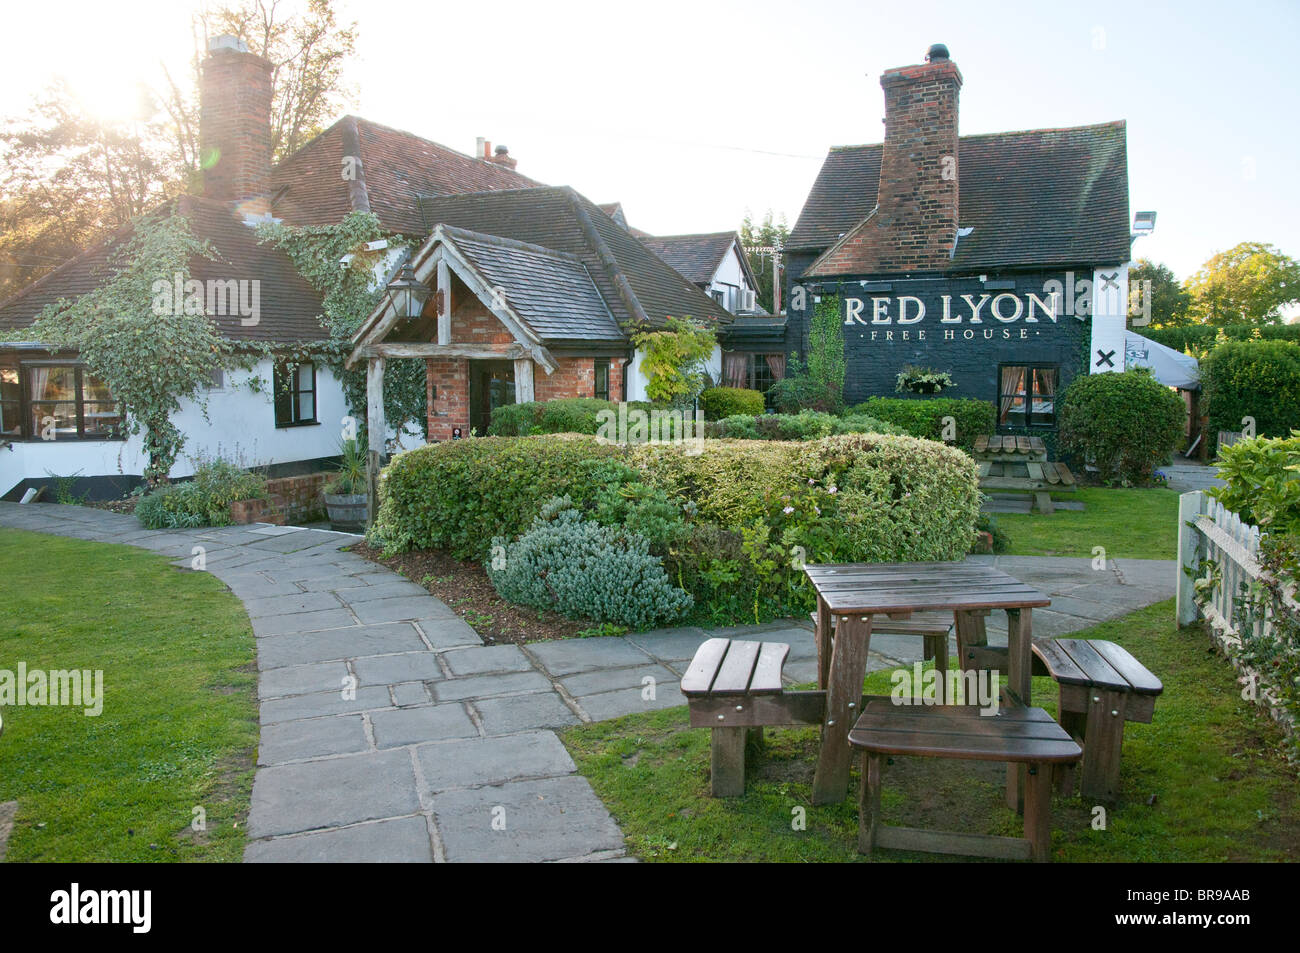 Roten Lyon Pub und Restaurant, Hurley, Berkshire, UK Stockfoto